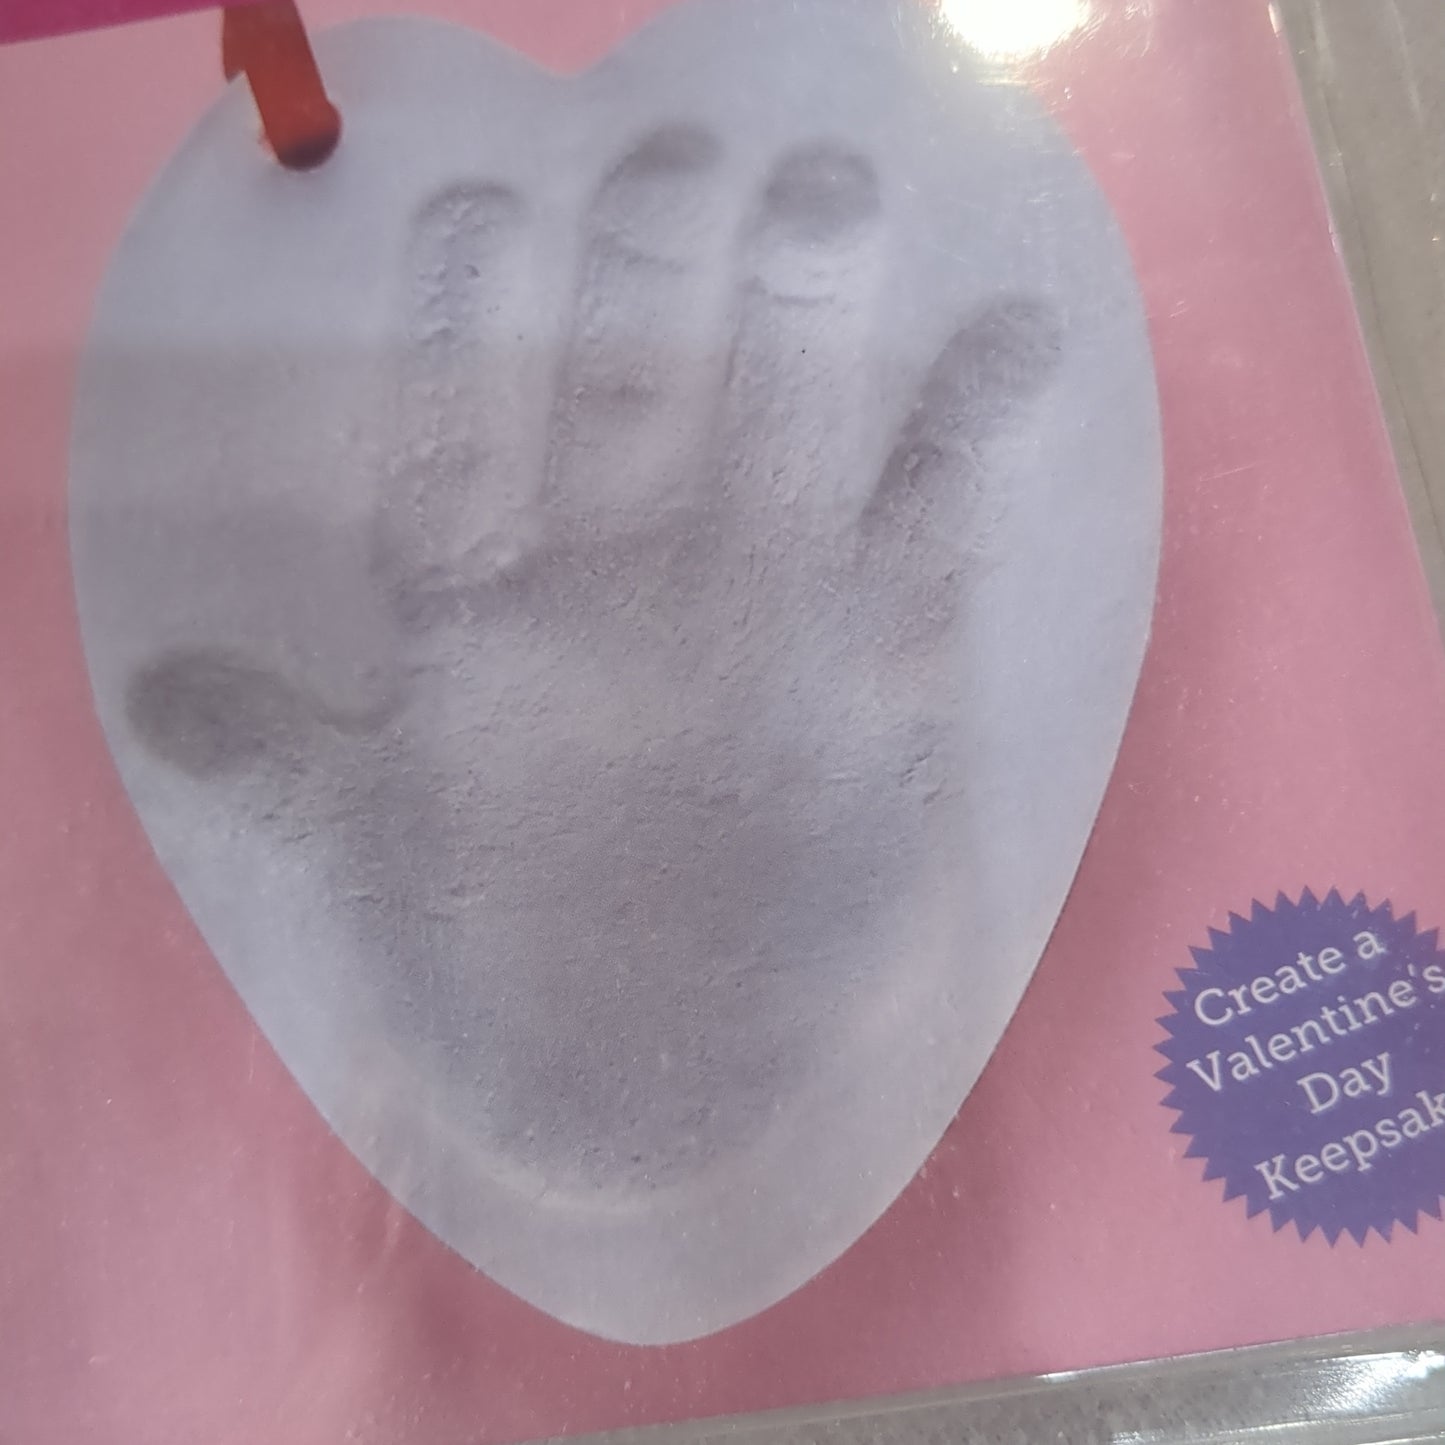 Valentine's Day plaster handprint kit